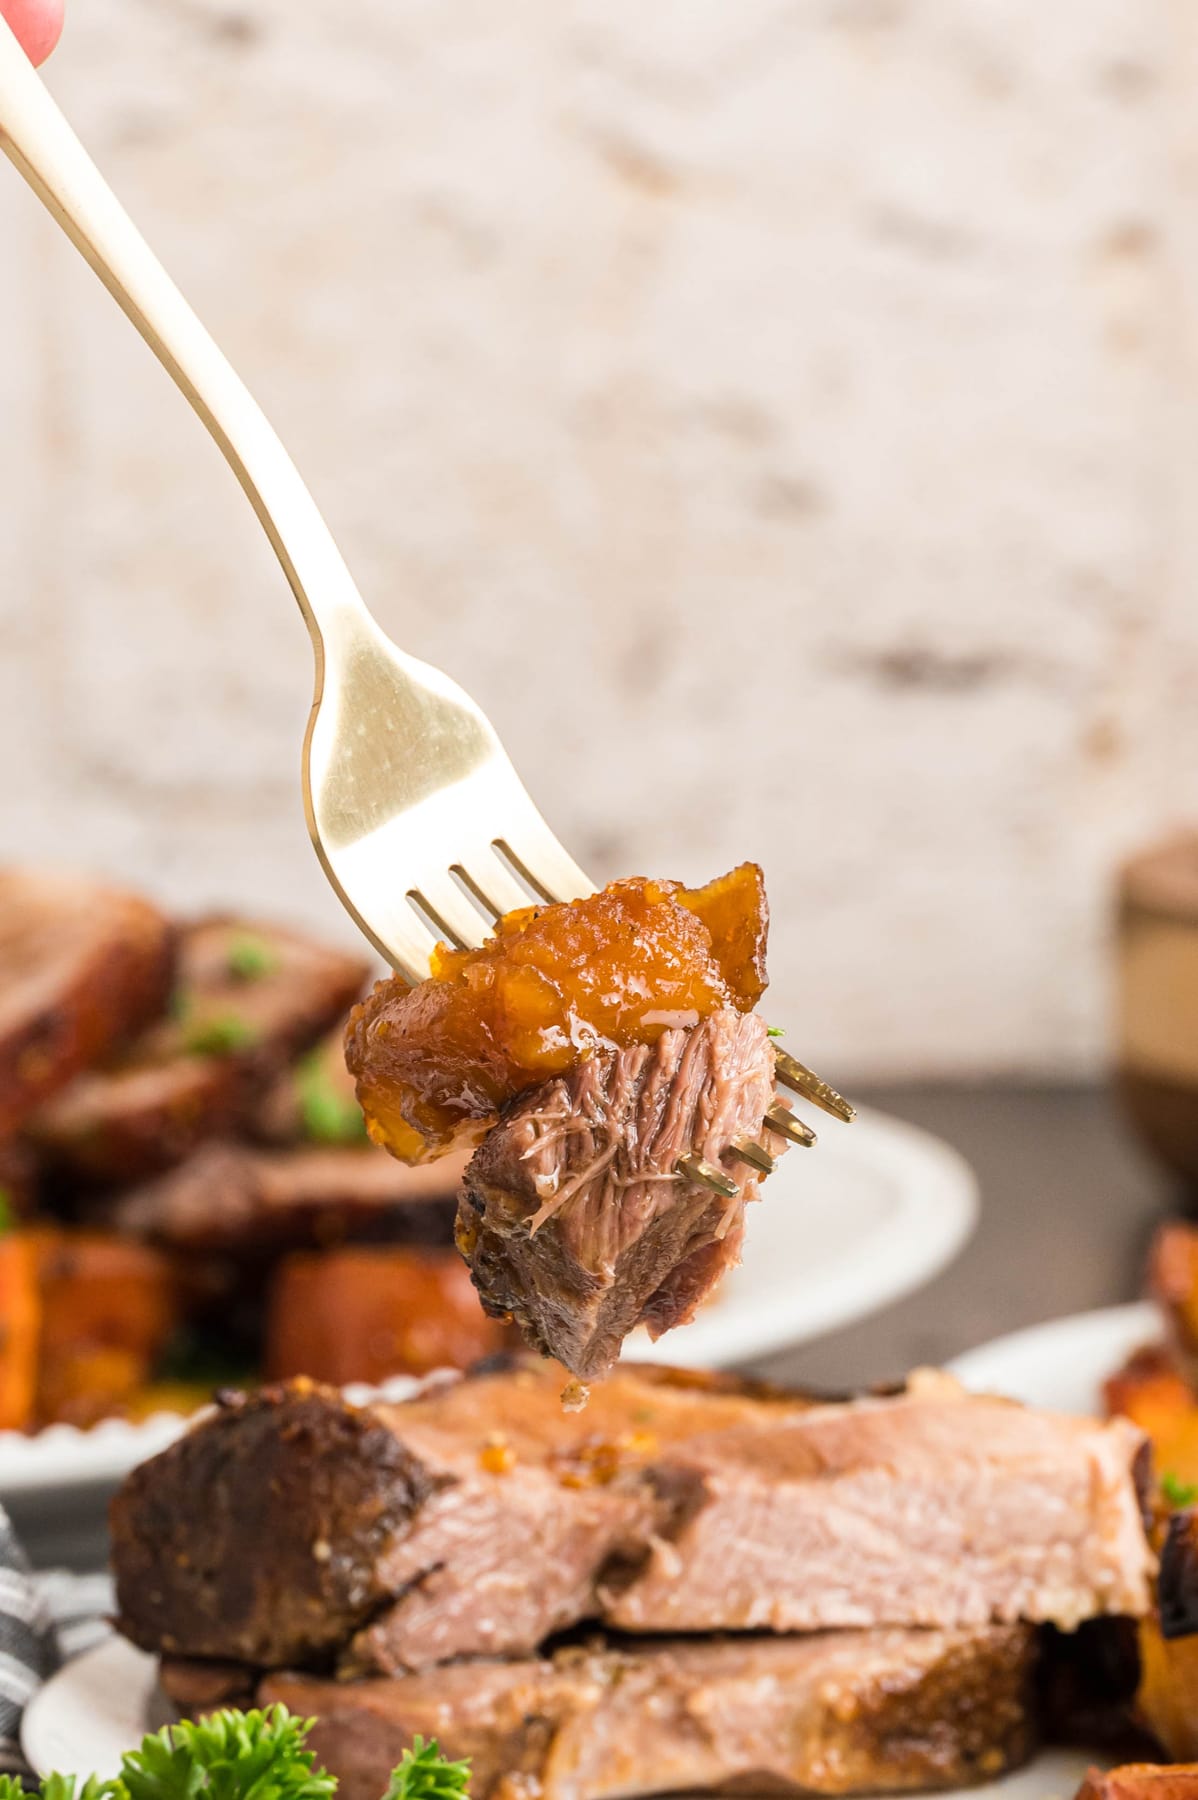 A bite of pork roast on a fork